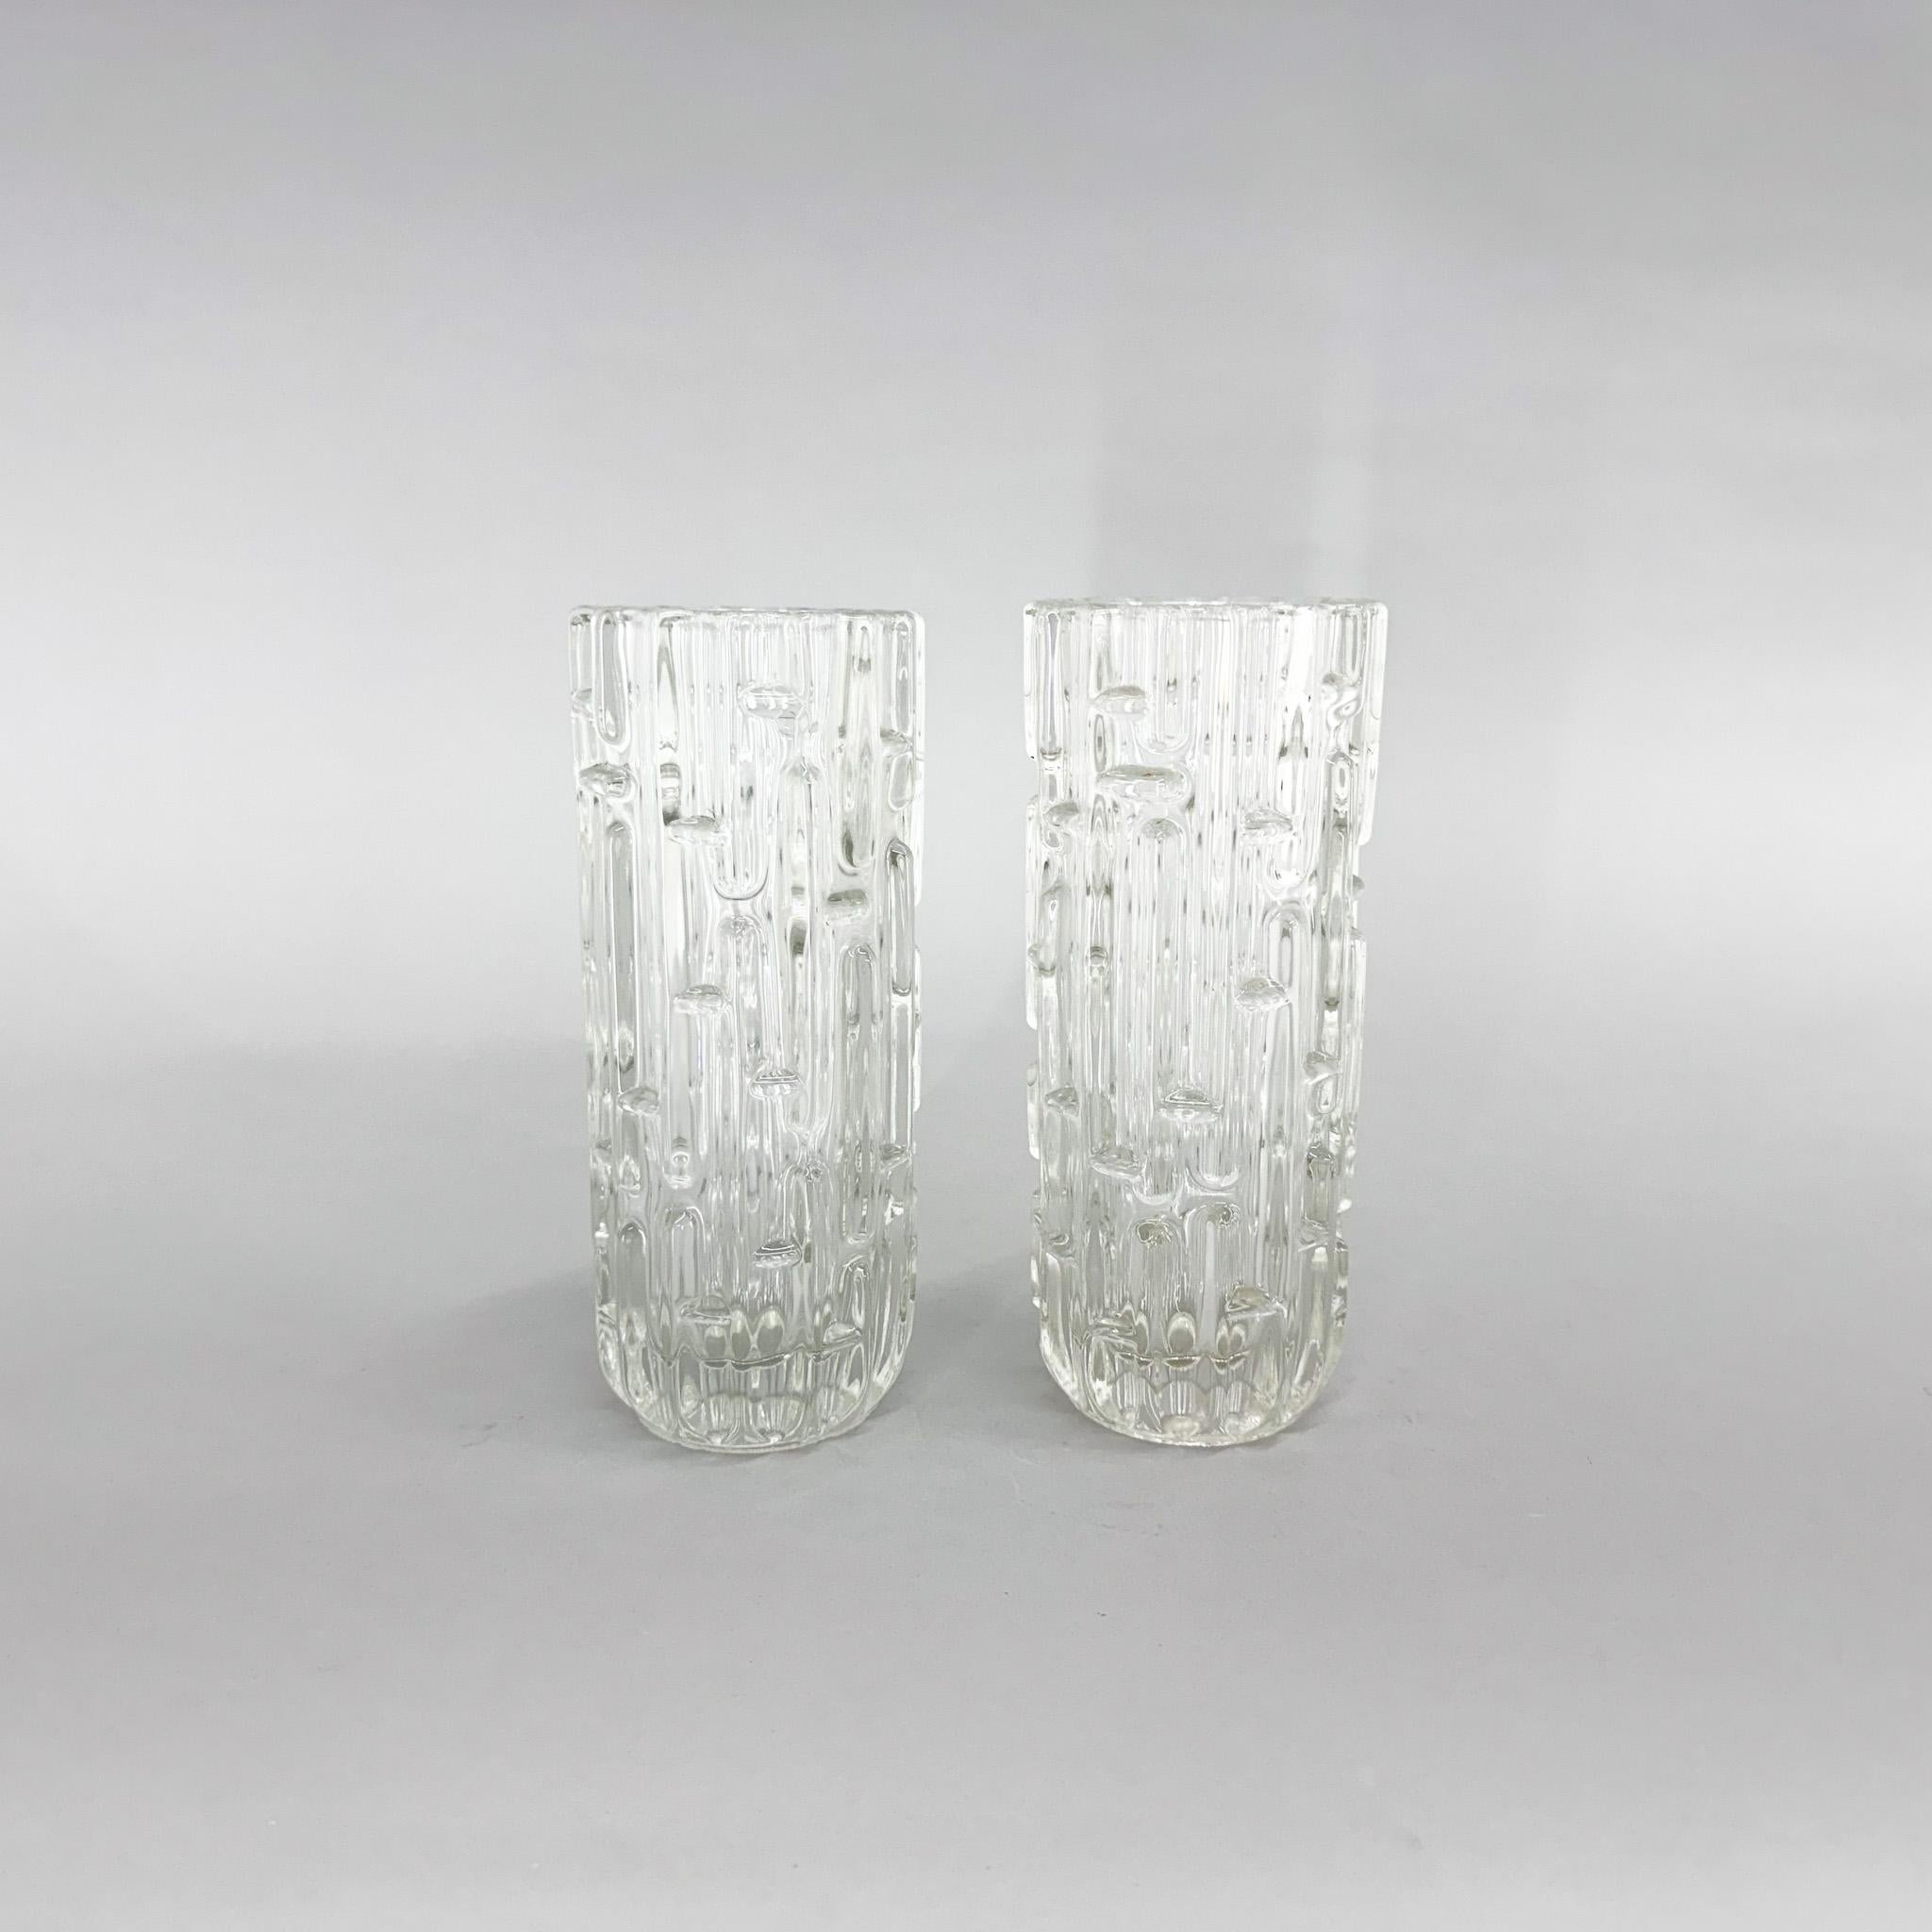 Set of Two 'Maze' Vases by Frantisek Vizner, 1965 For Sale 3